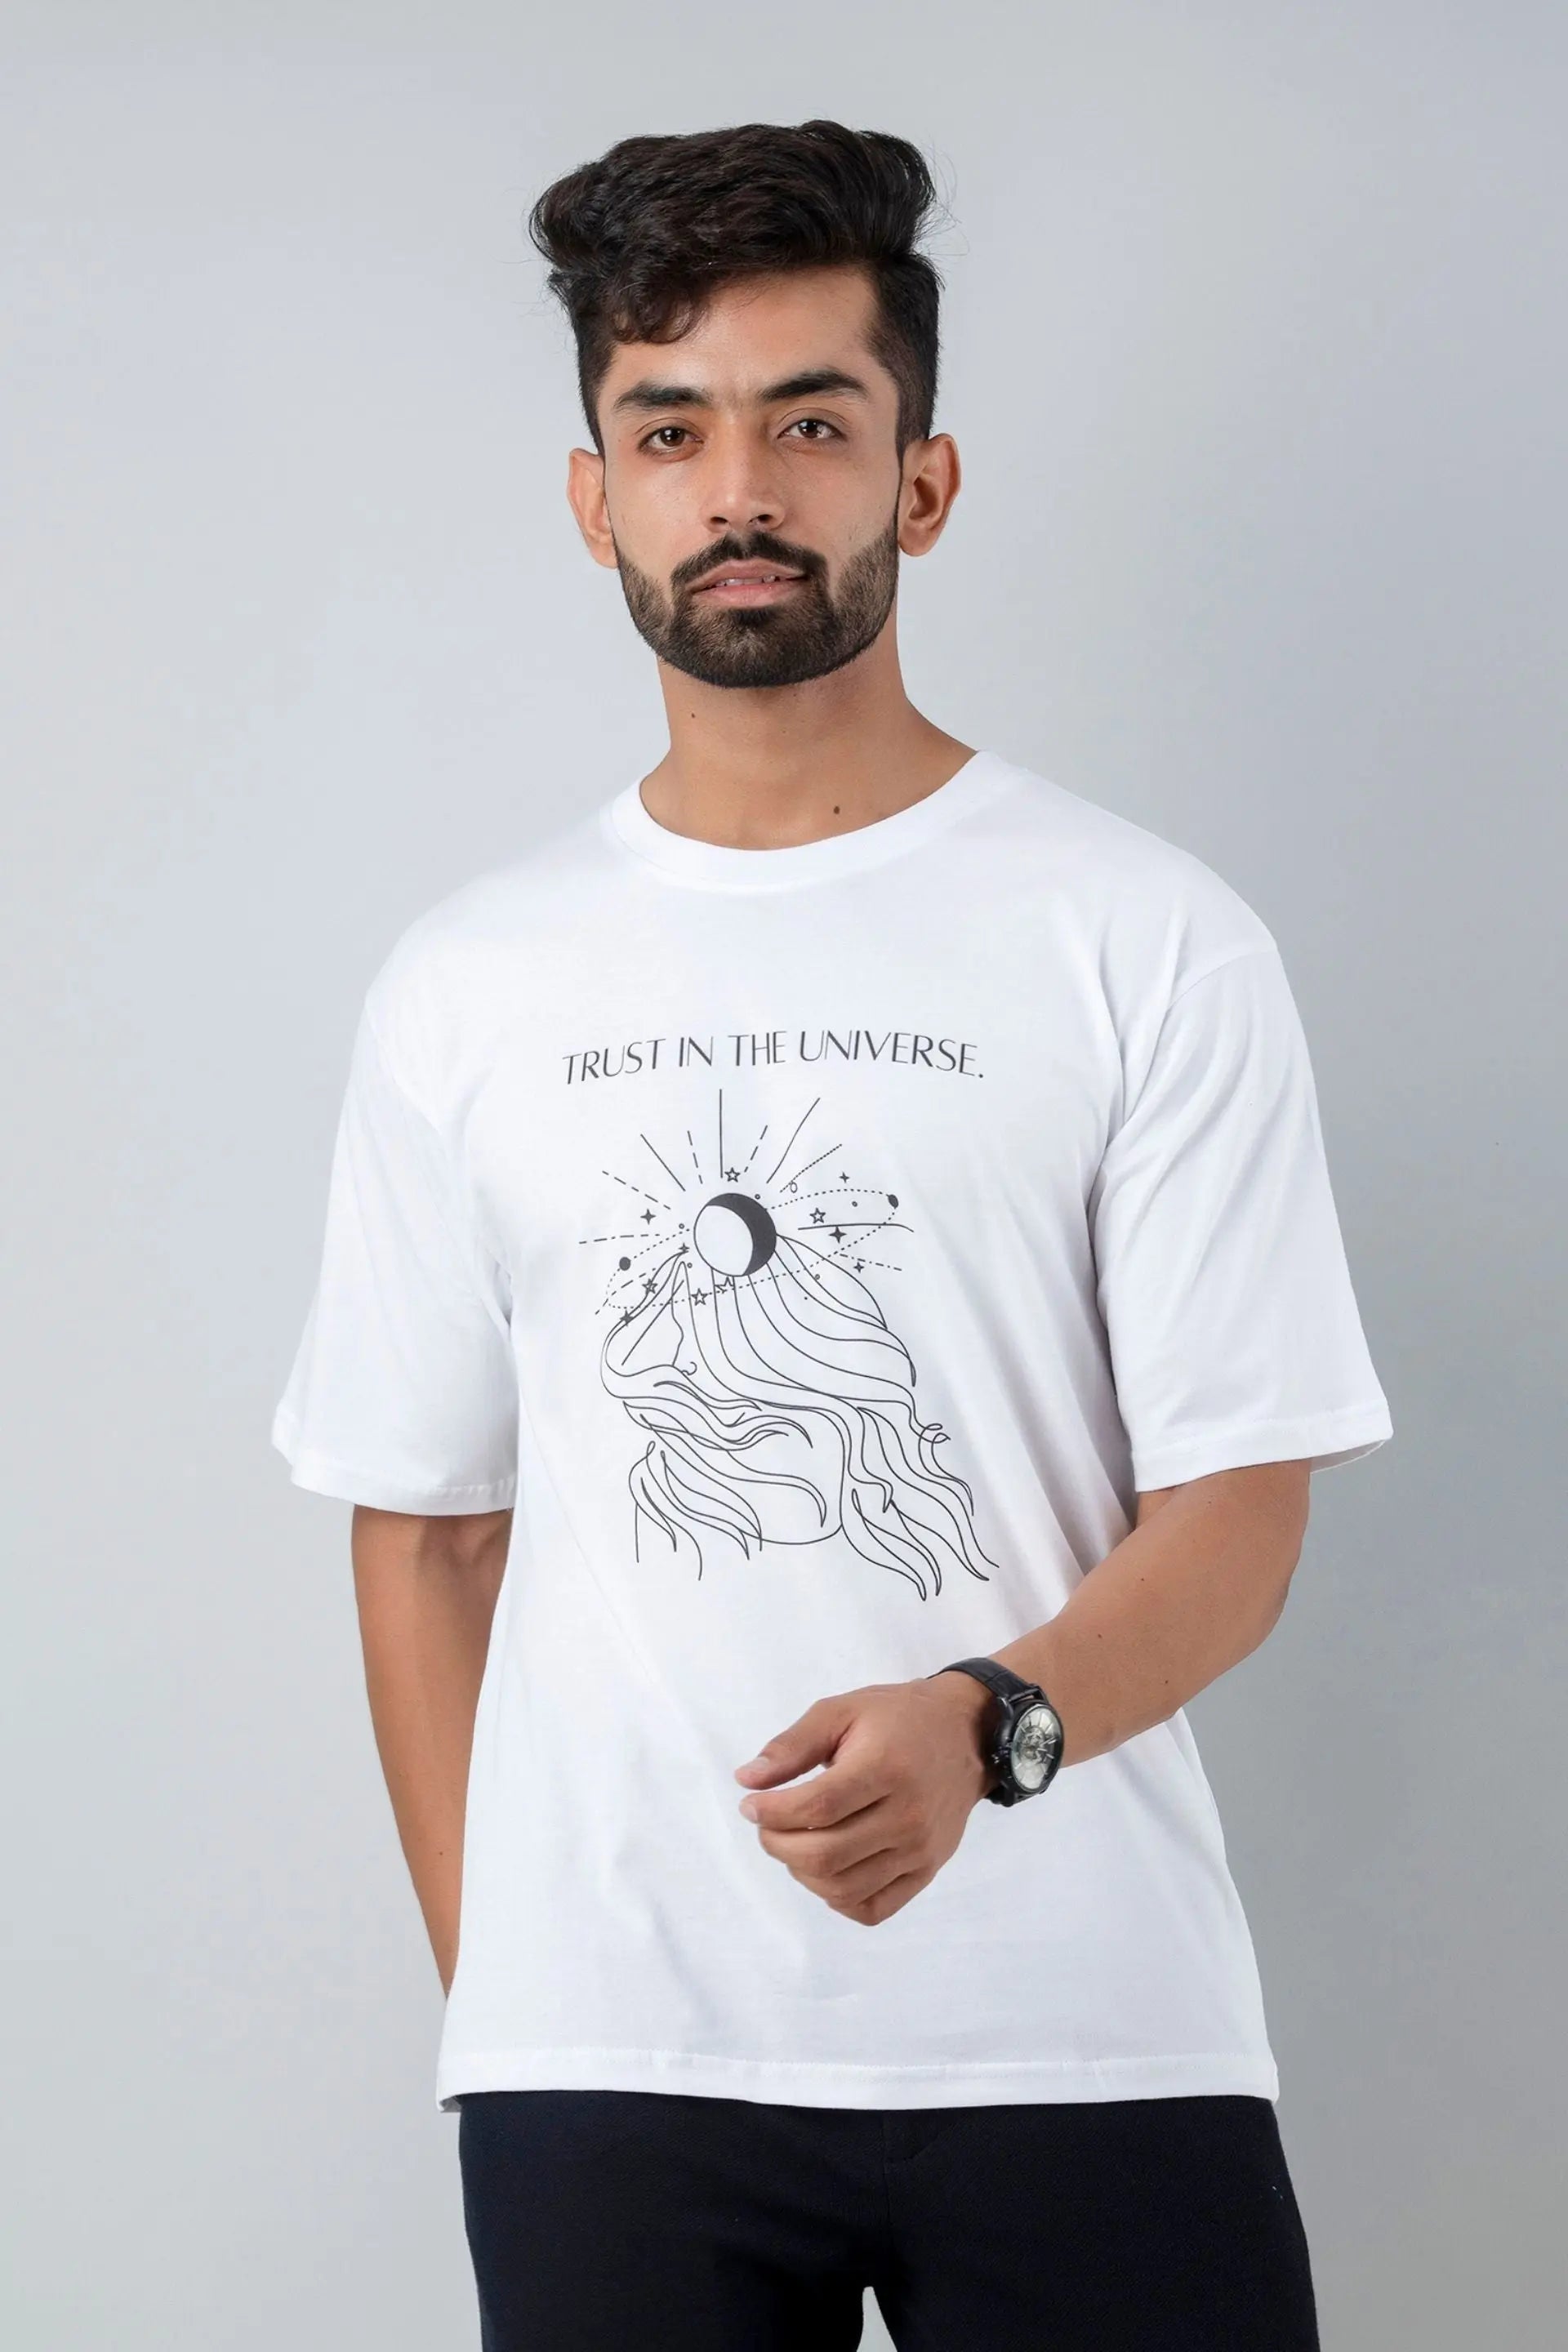 Firangi Yarn Oversize/Baggy Tshirt in White With Manifestation Print